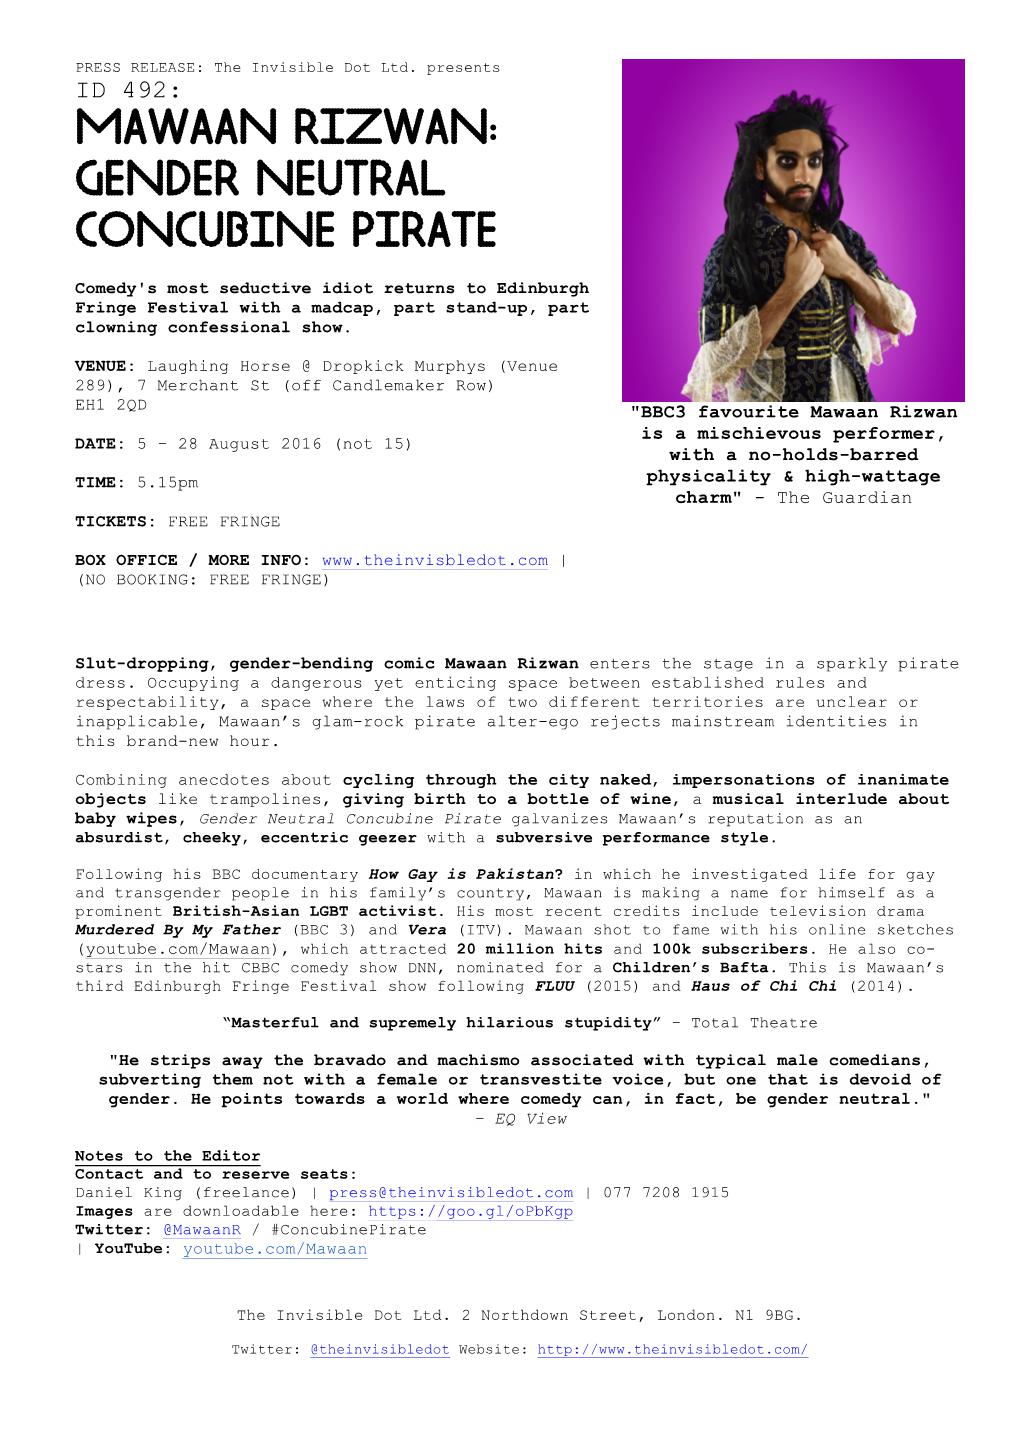 Mawaan Rizwan: Gender Neutral Concubine Pirate